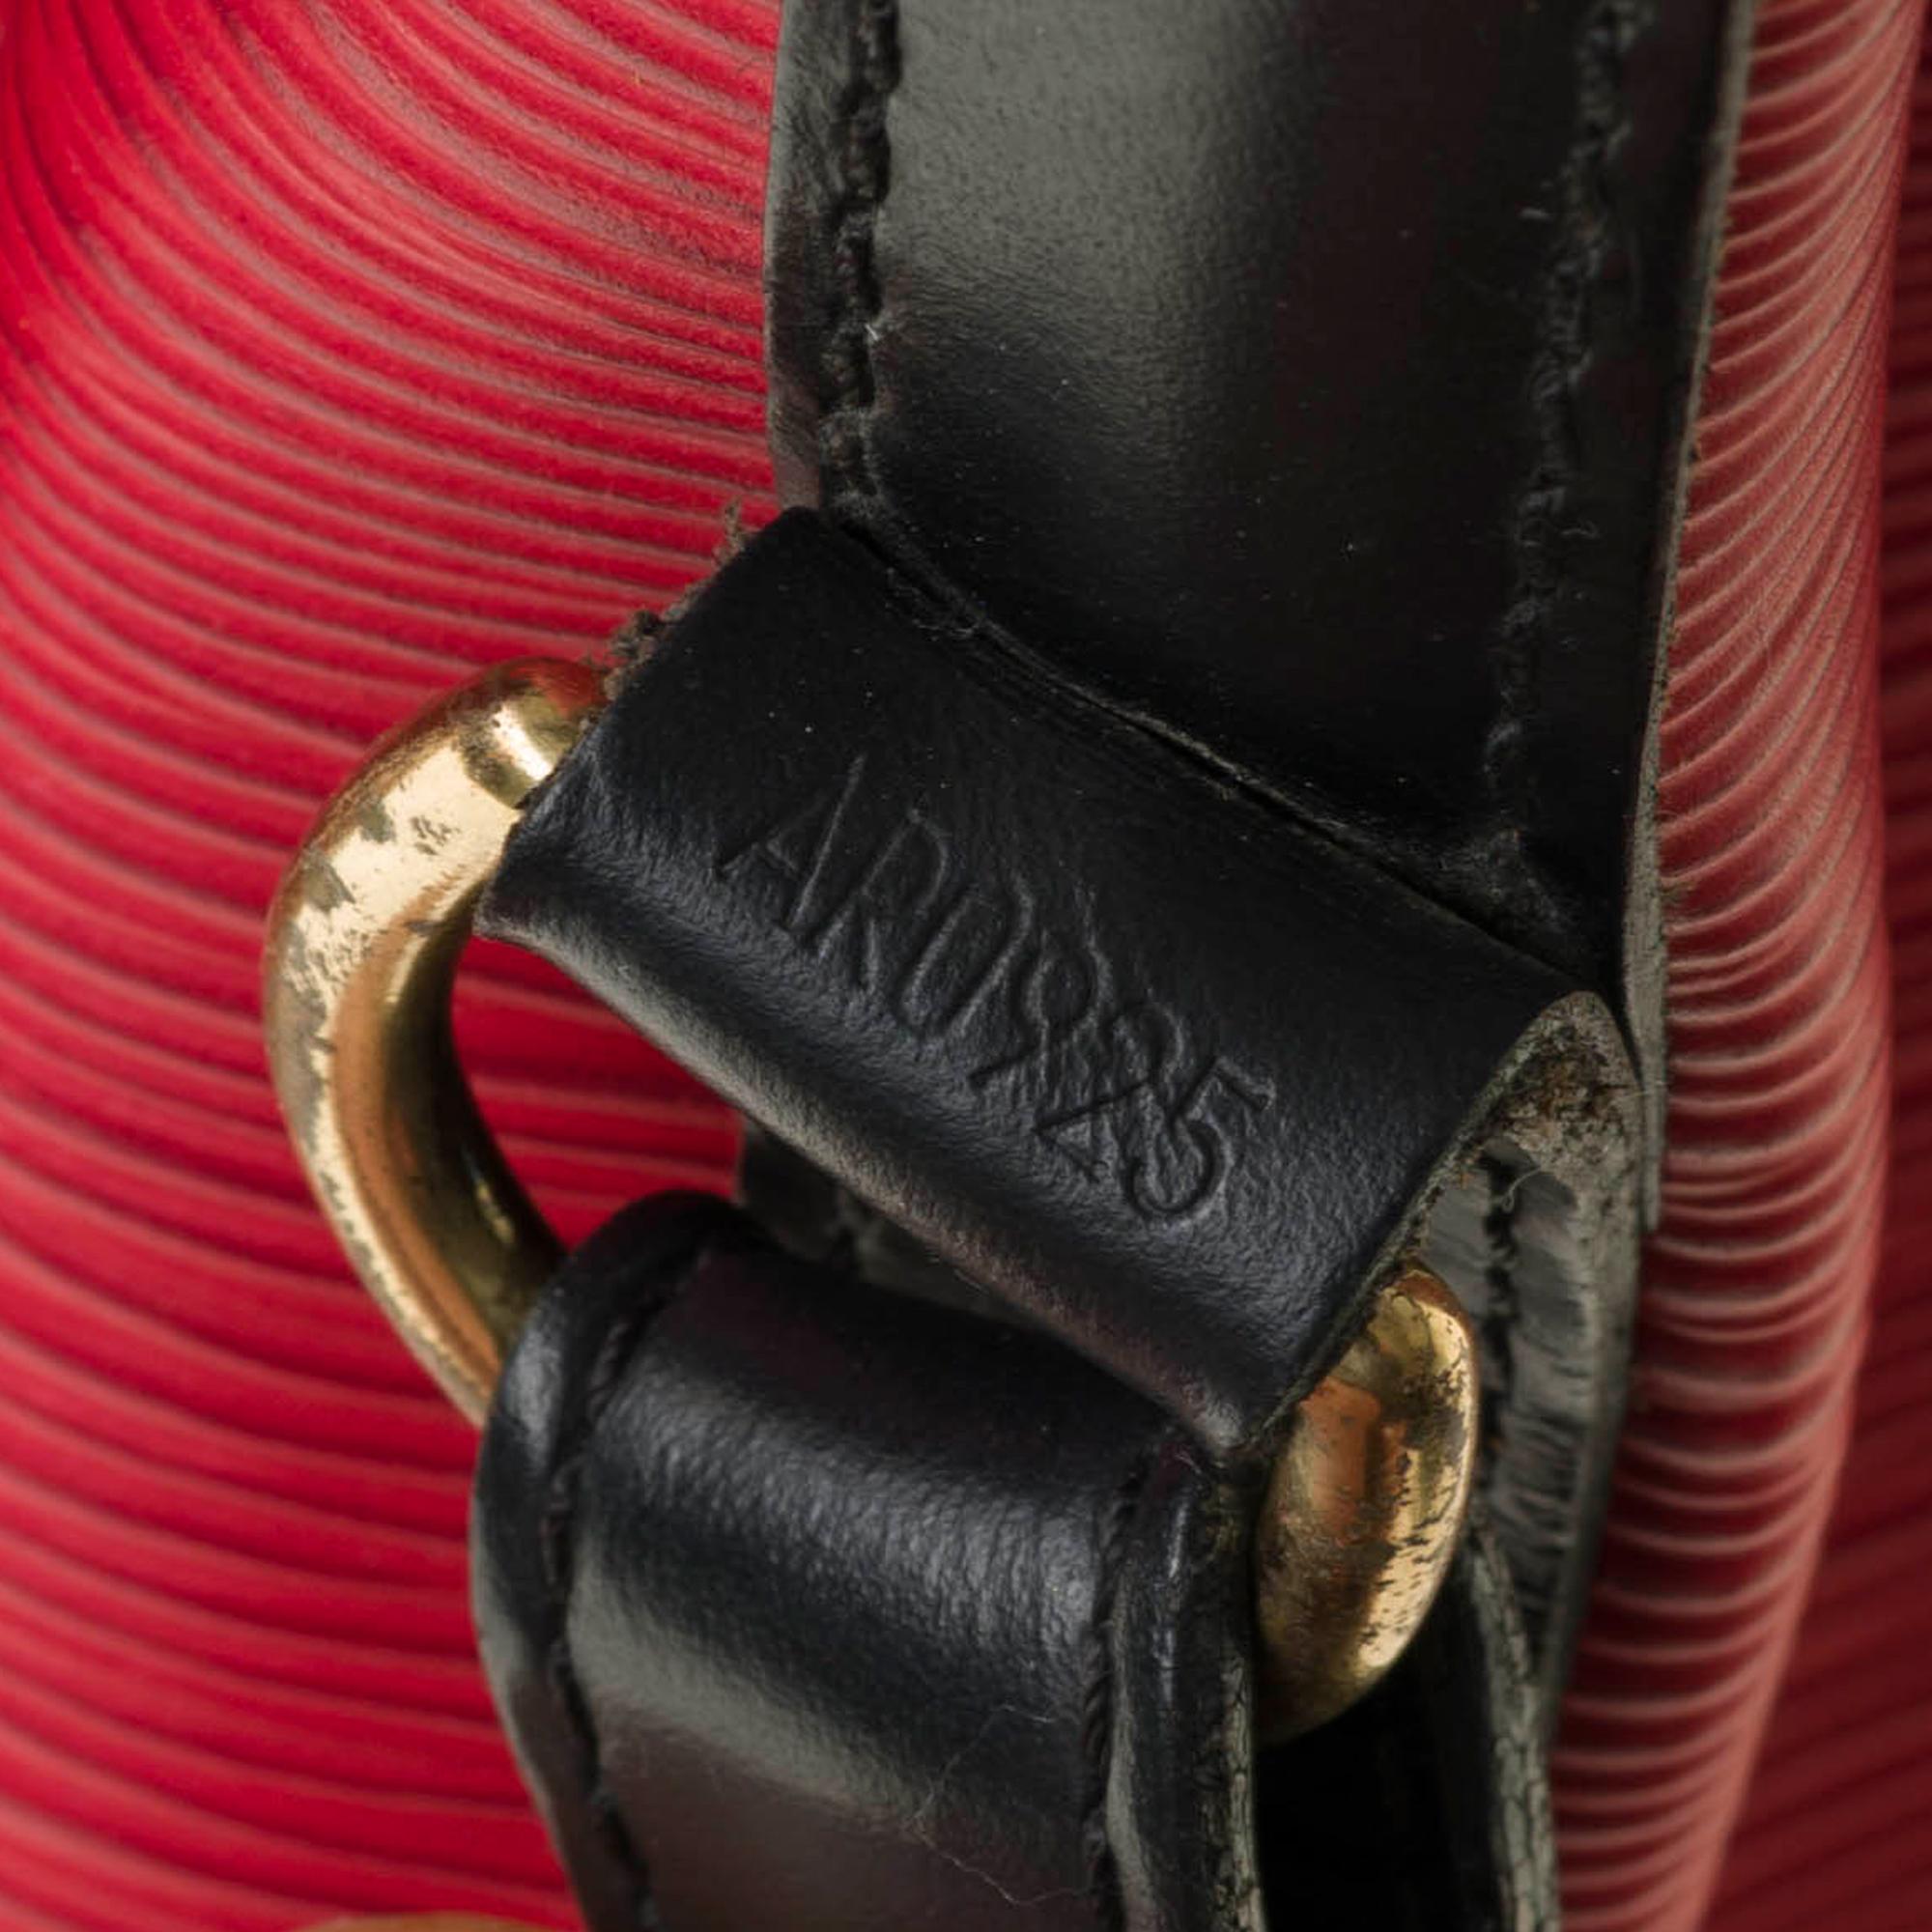 Red Louis Vuitton Noé PM shoulder bag in red & black epi leather, gold hardware